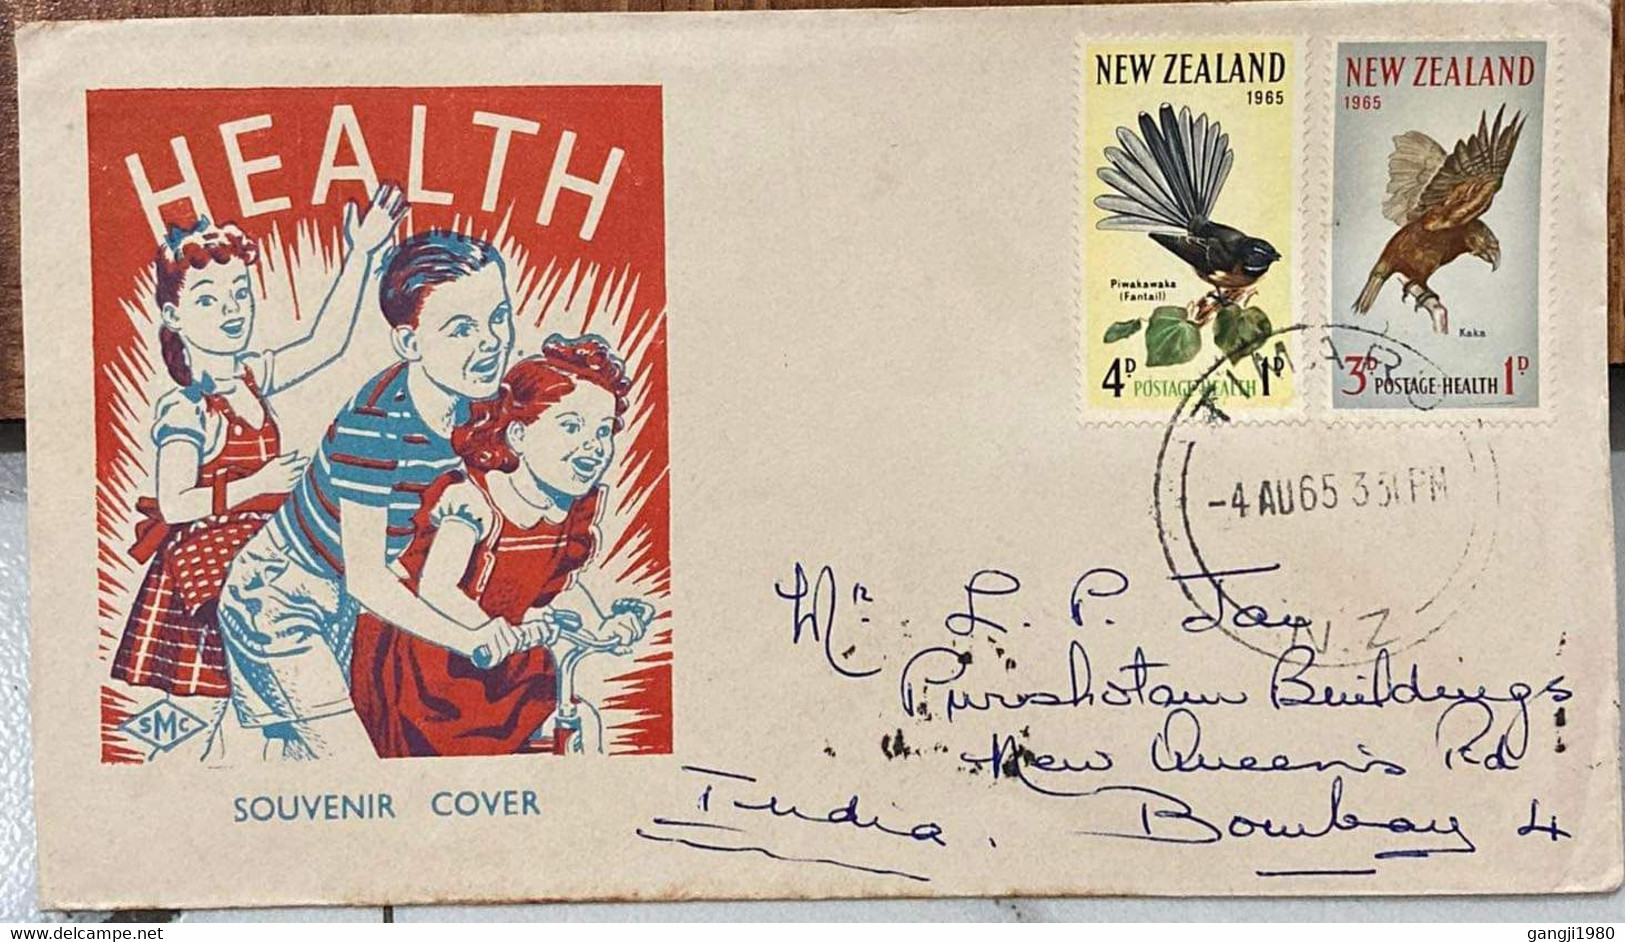 NEW ZEALAND,1965, Health, PRIVATE FDC ,TO ,INDIA,TO ADDRESS, L.P.JAI ,CRICKETER,CRICKET,Timaro,POST MARK. - Storia Postale